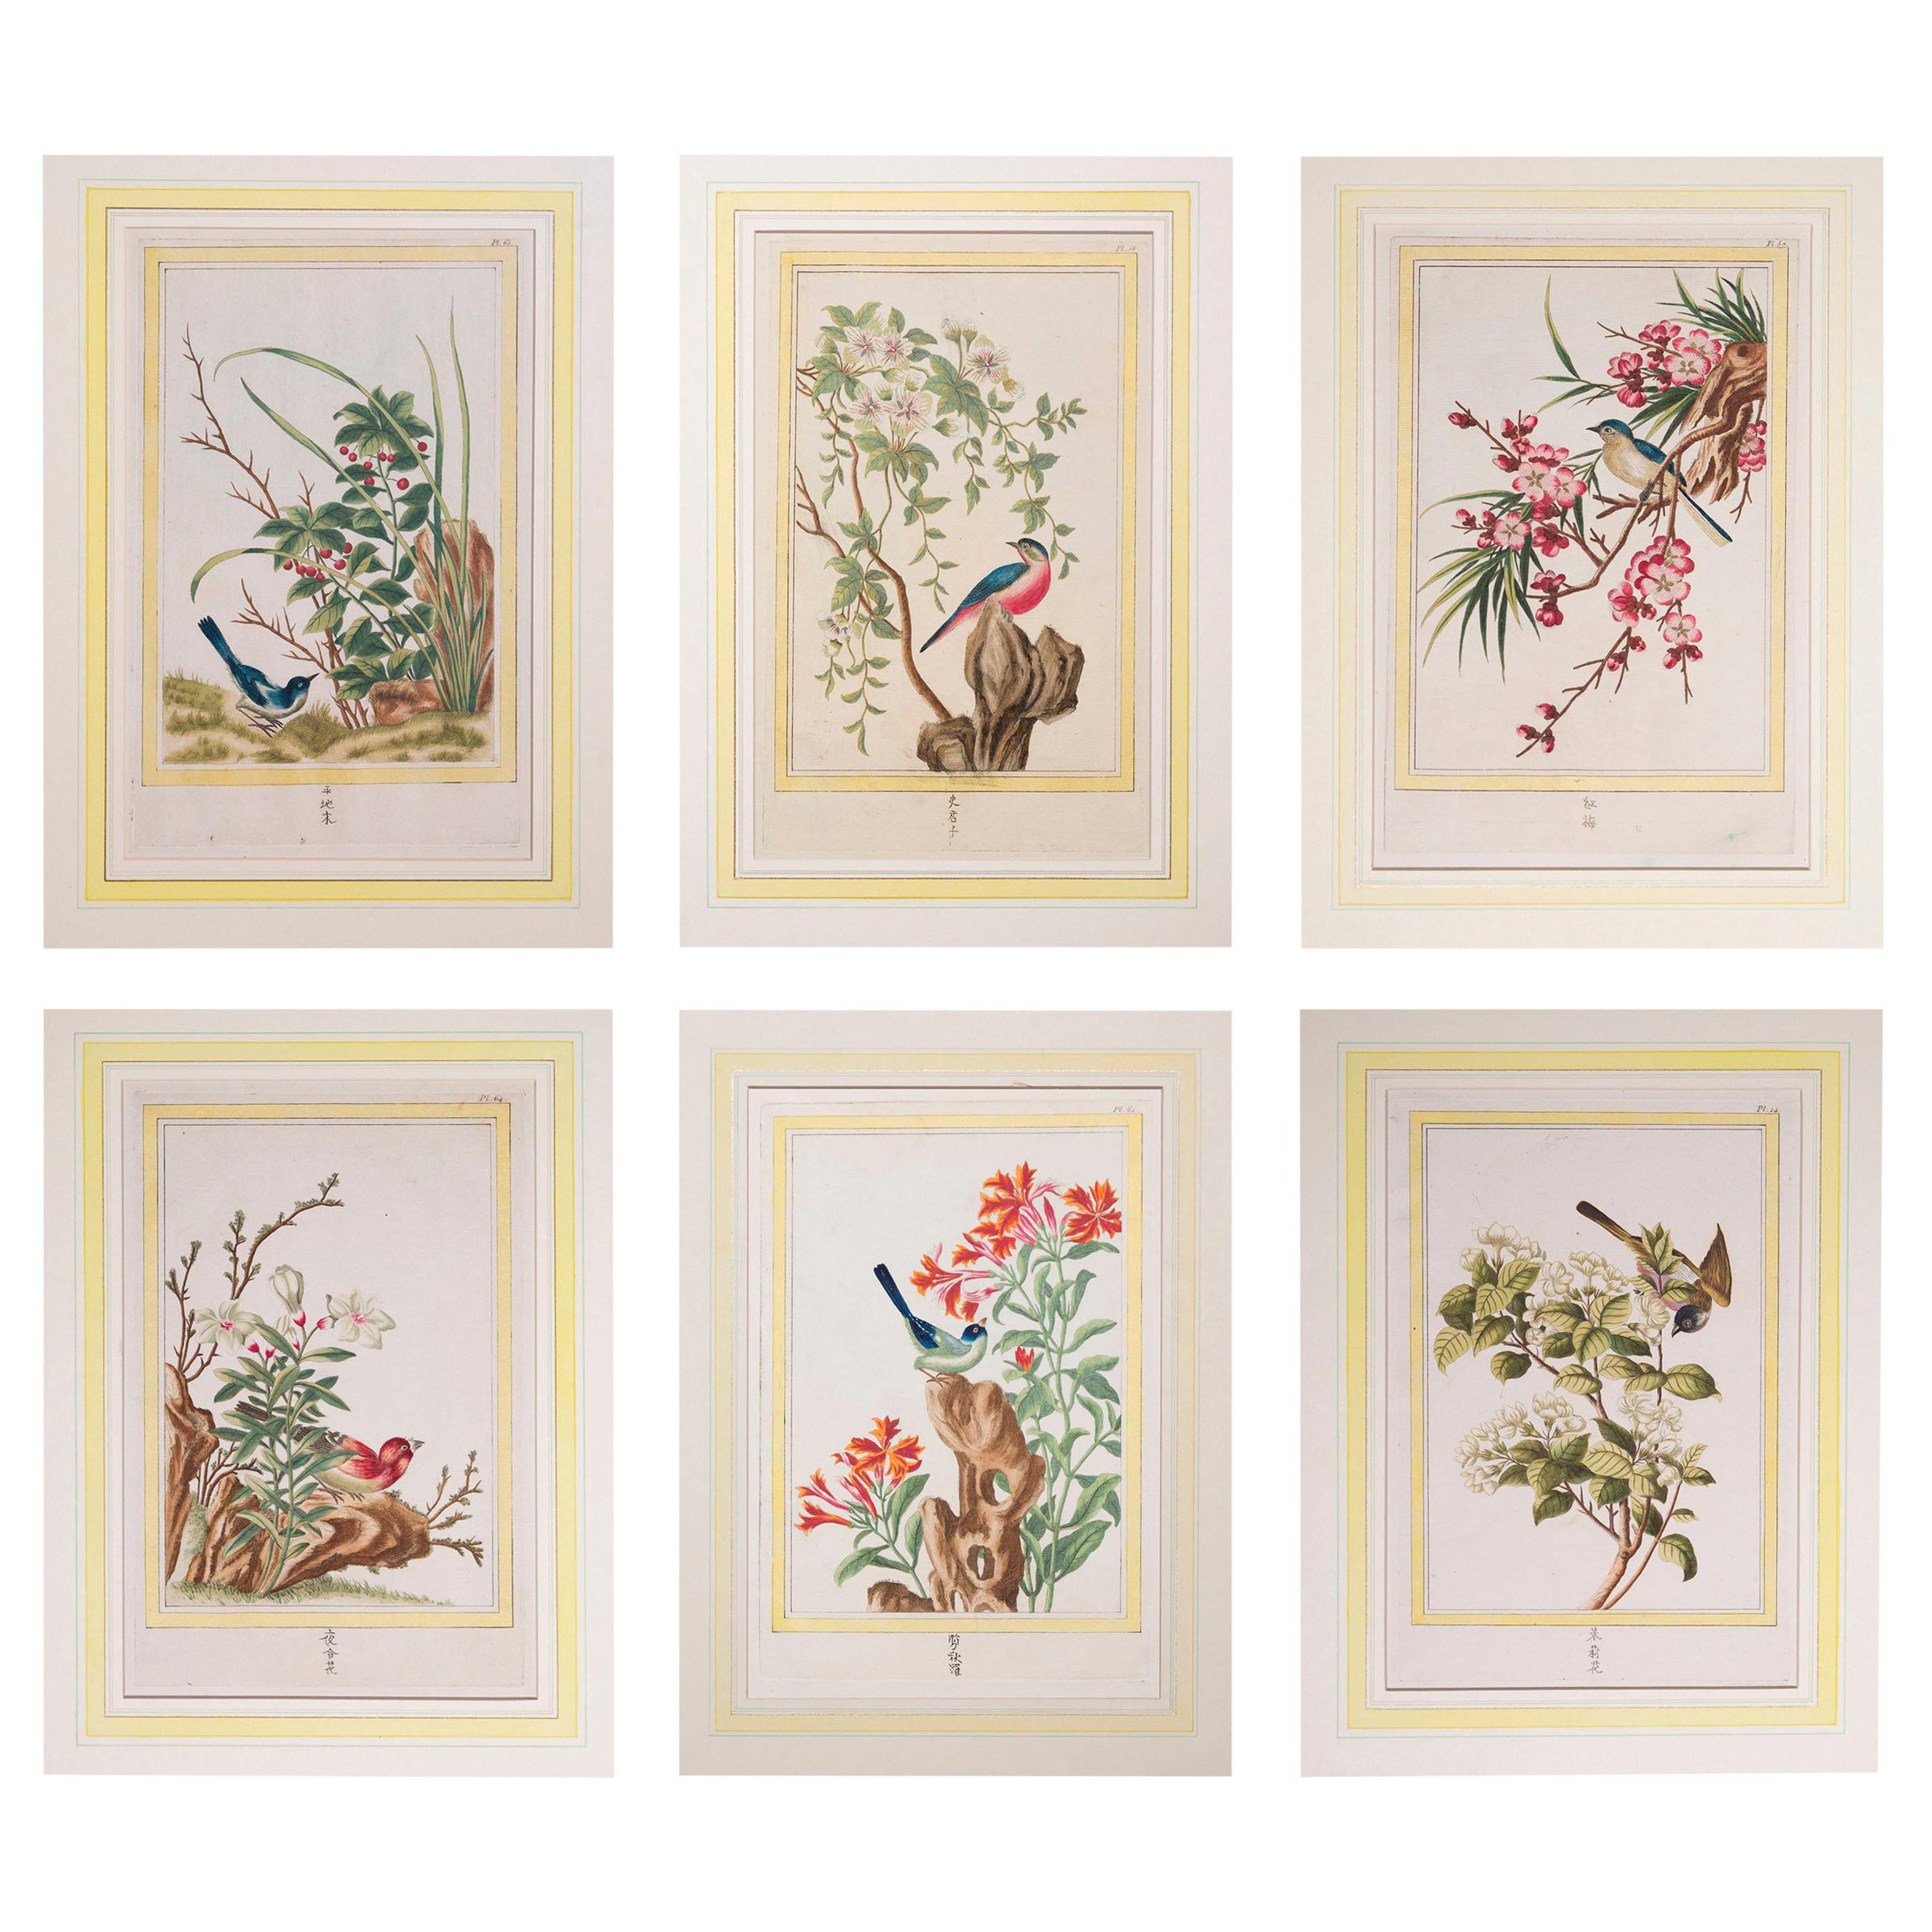 Set of Six 18th Century Hand-Colored Botanical Prints, P.J. Buchoz, 1776